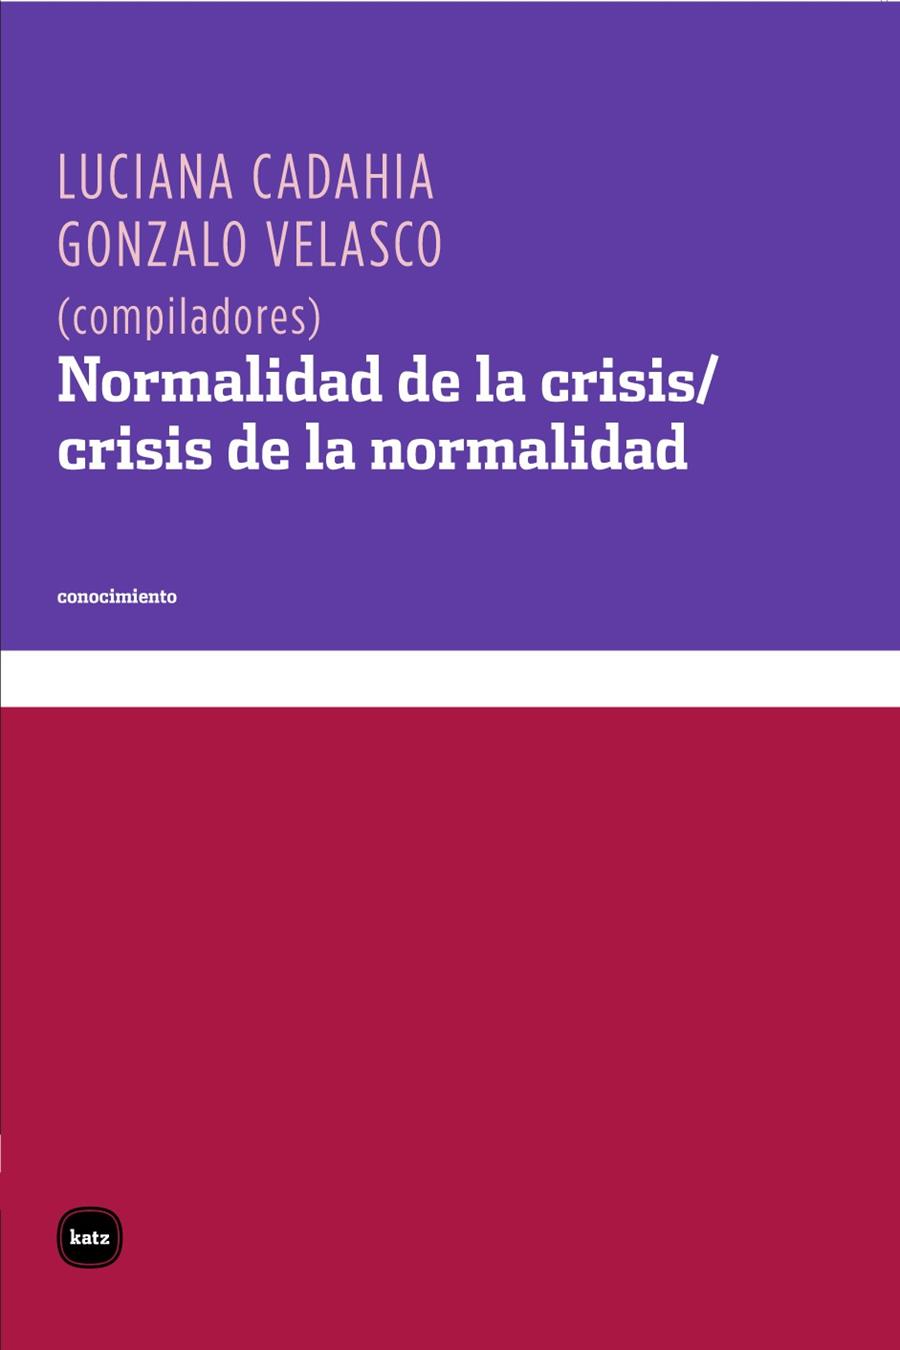 Normalidad de la crisis / crisis de la normalidad | Luciana Cadahia, Gonzalo Velasco  | Cooperativa autogestionària